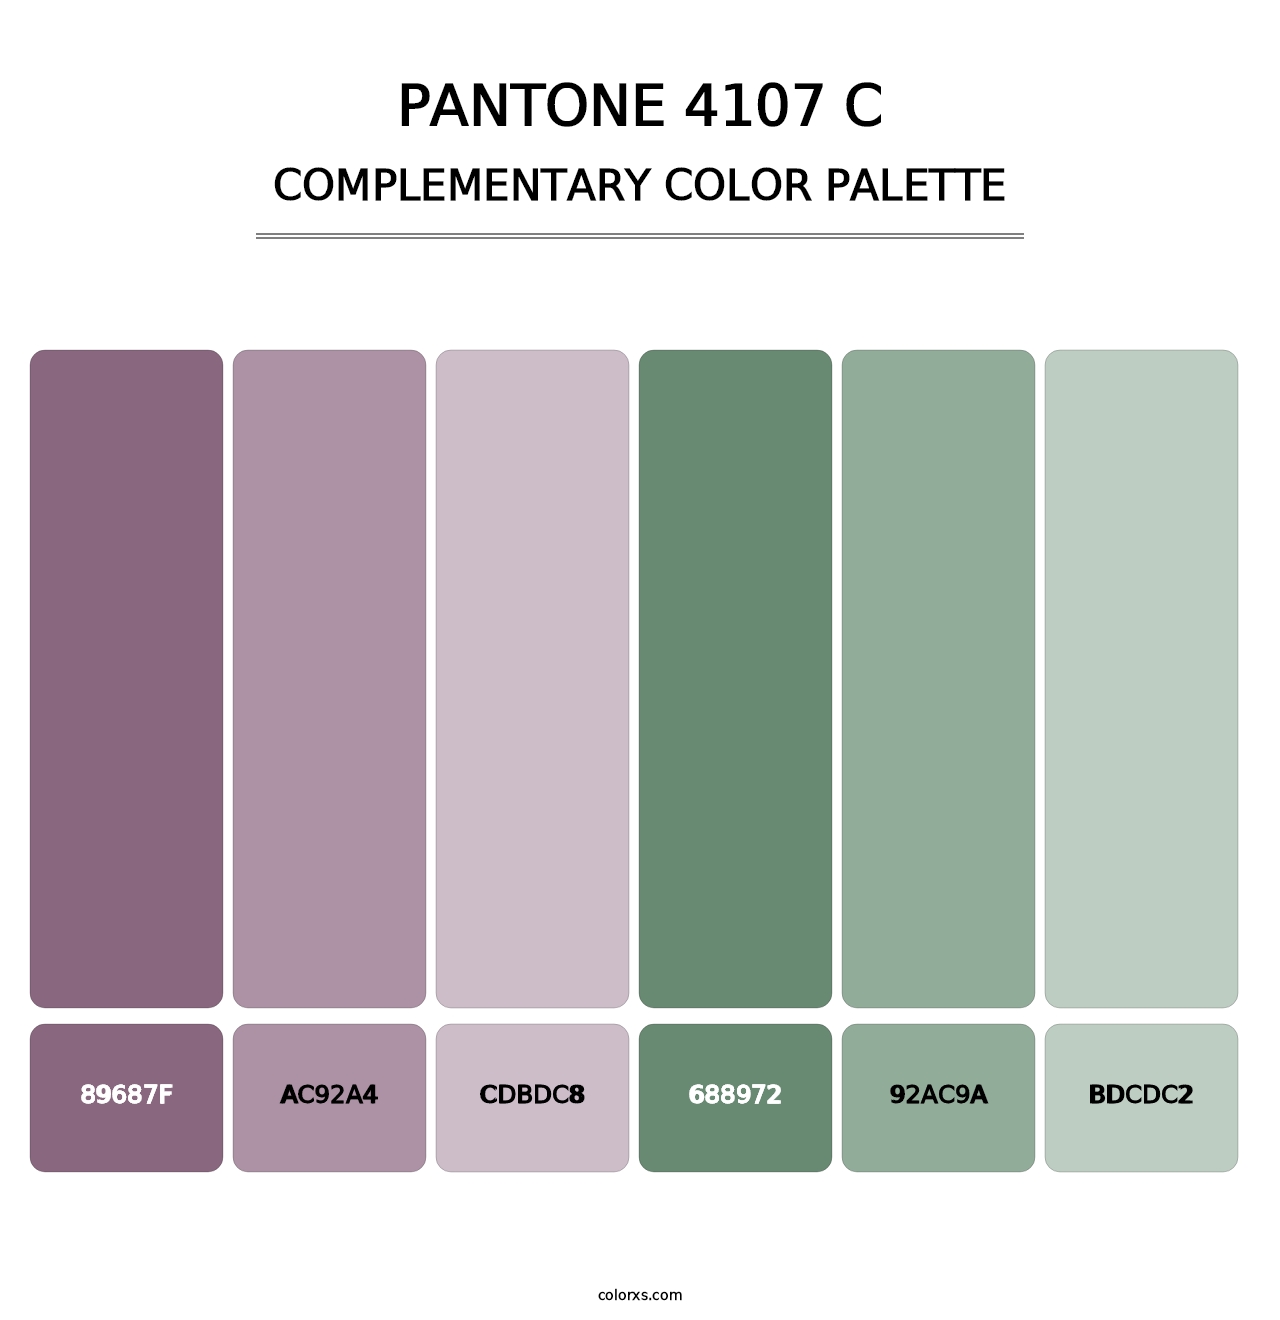 PANTONE 4107 C - Complementary Color Palette